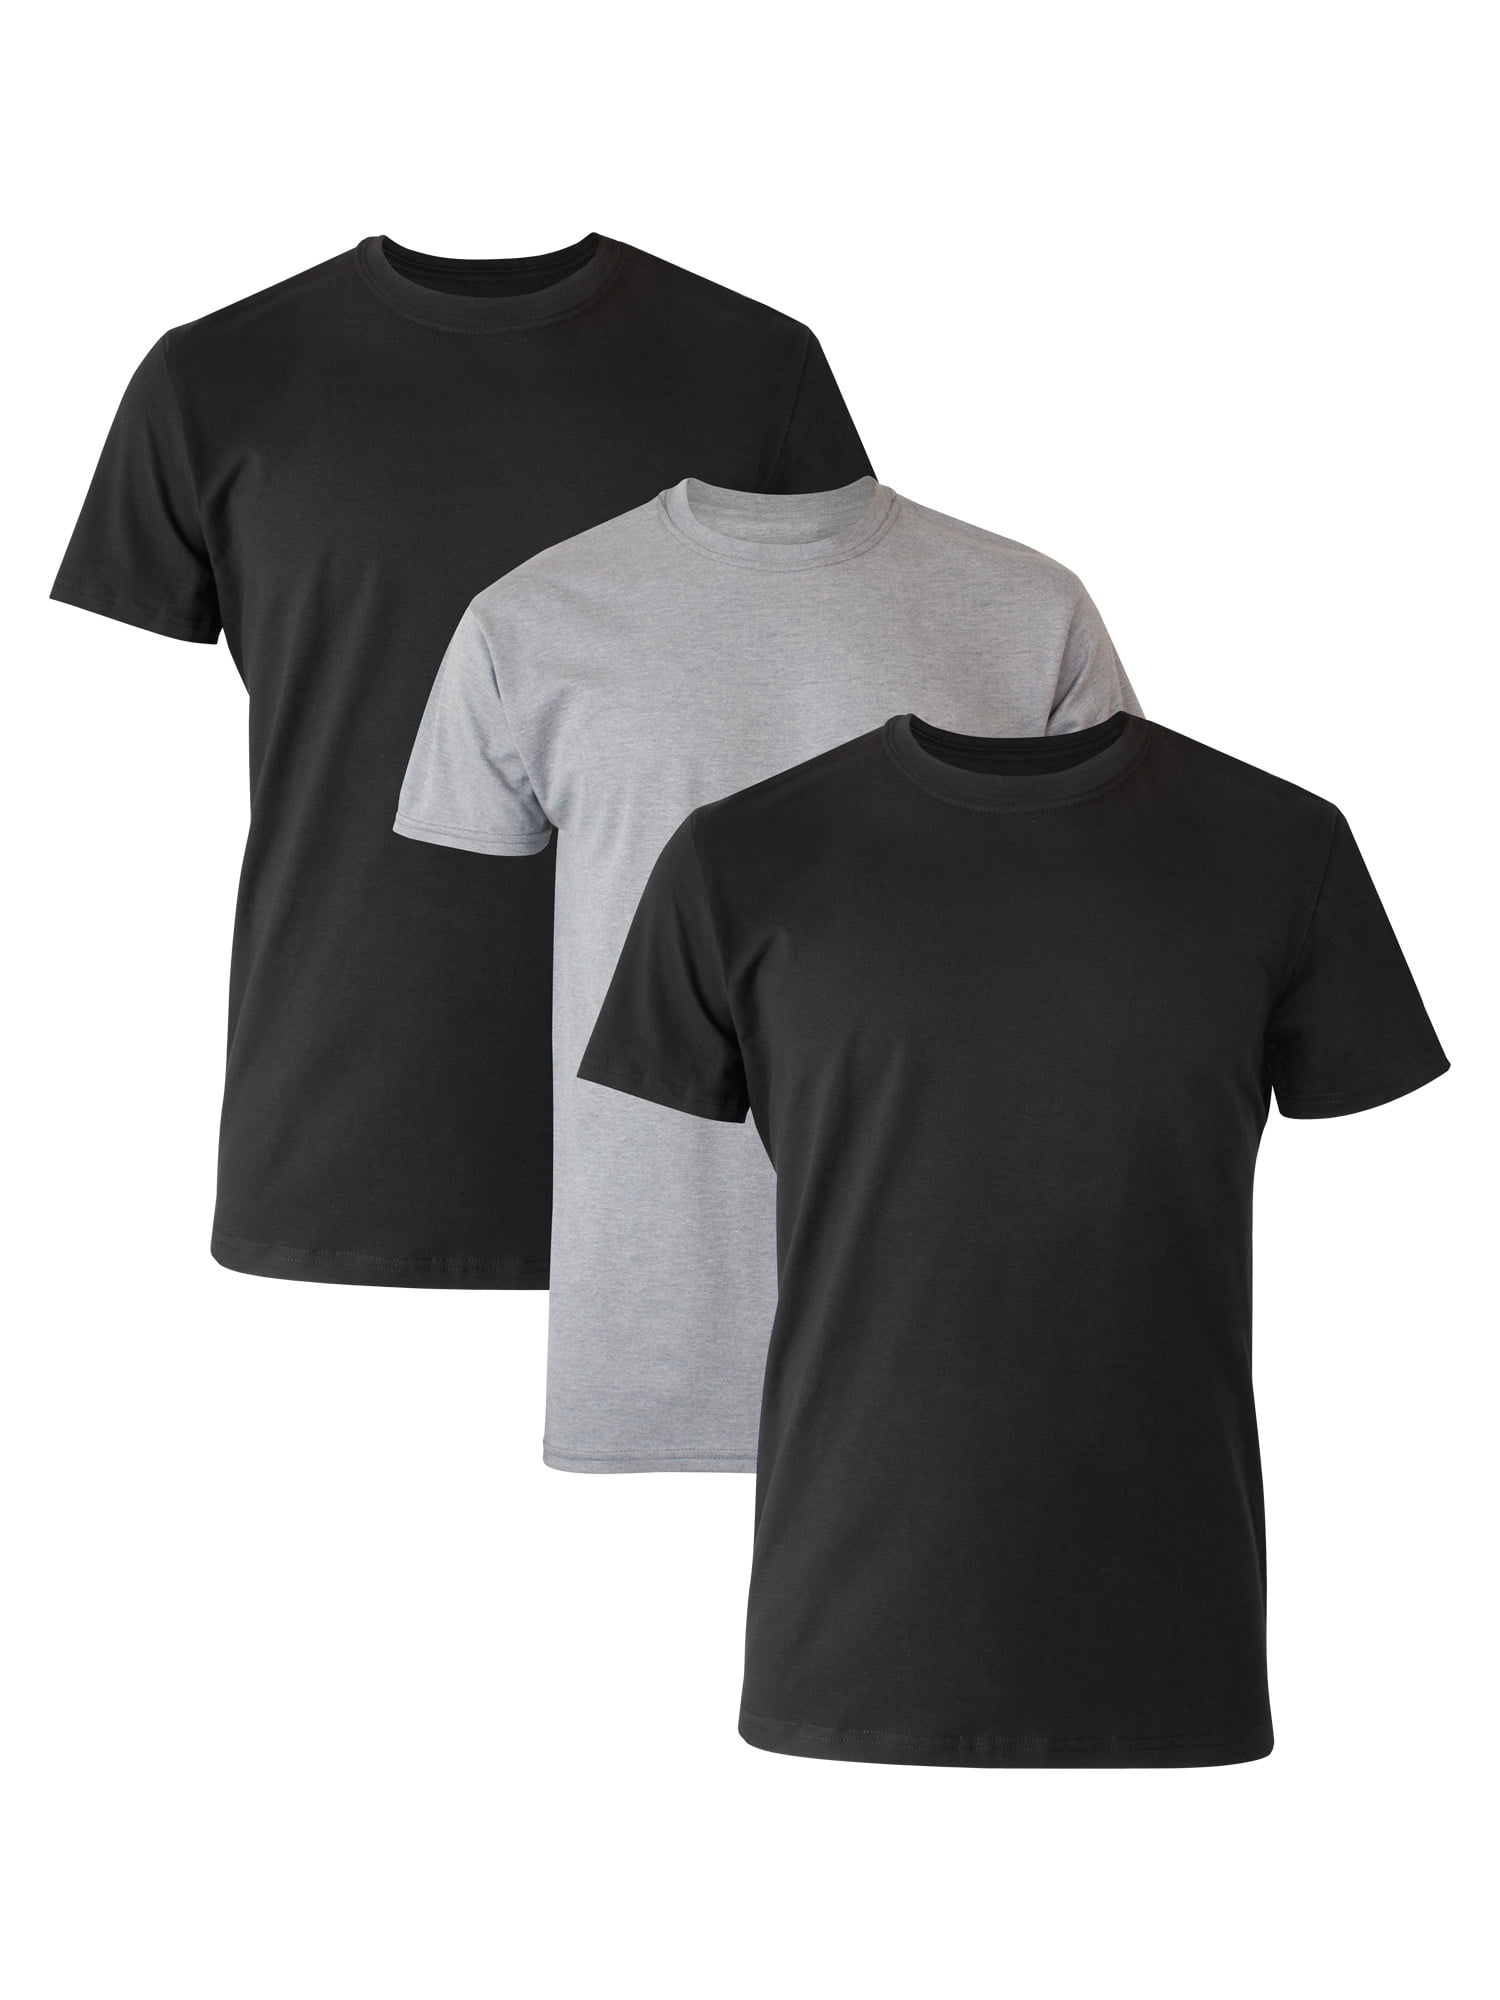 Hanes Men's Comfort Fit Ultra Soft Cotton Black/Grey T-Shirt Undershirts, 3  Pack